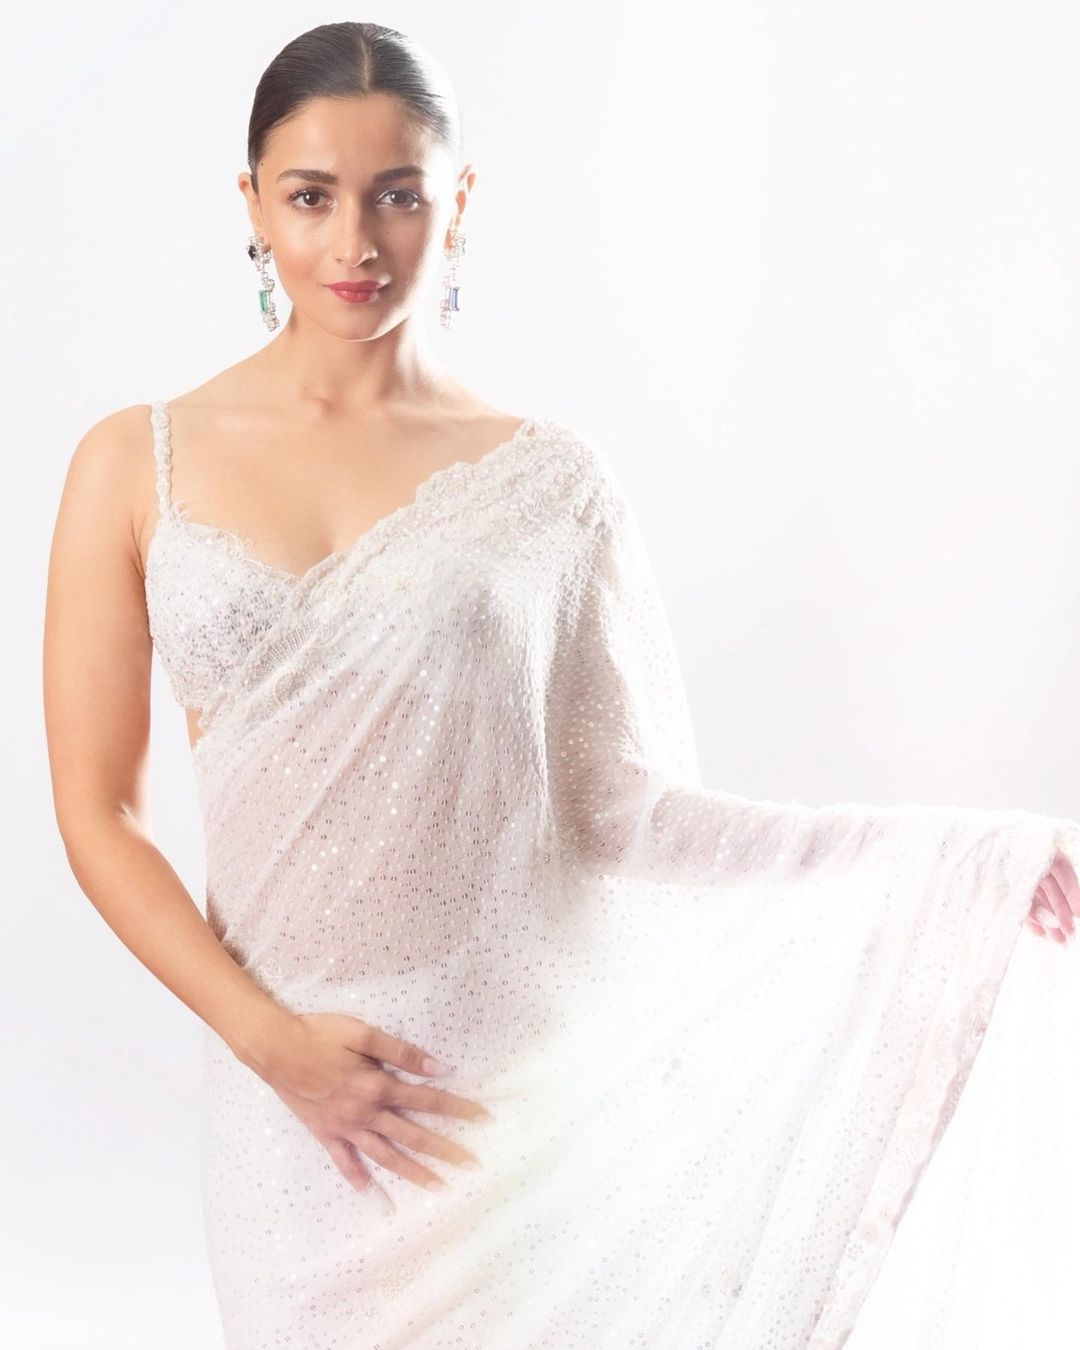 Alia Bhatt looked breathtaking in the sequinned white saree